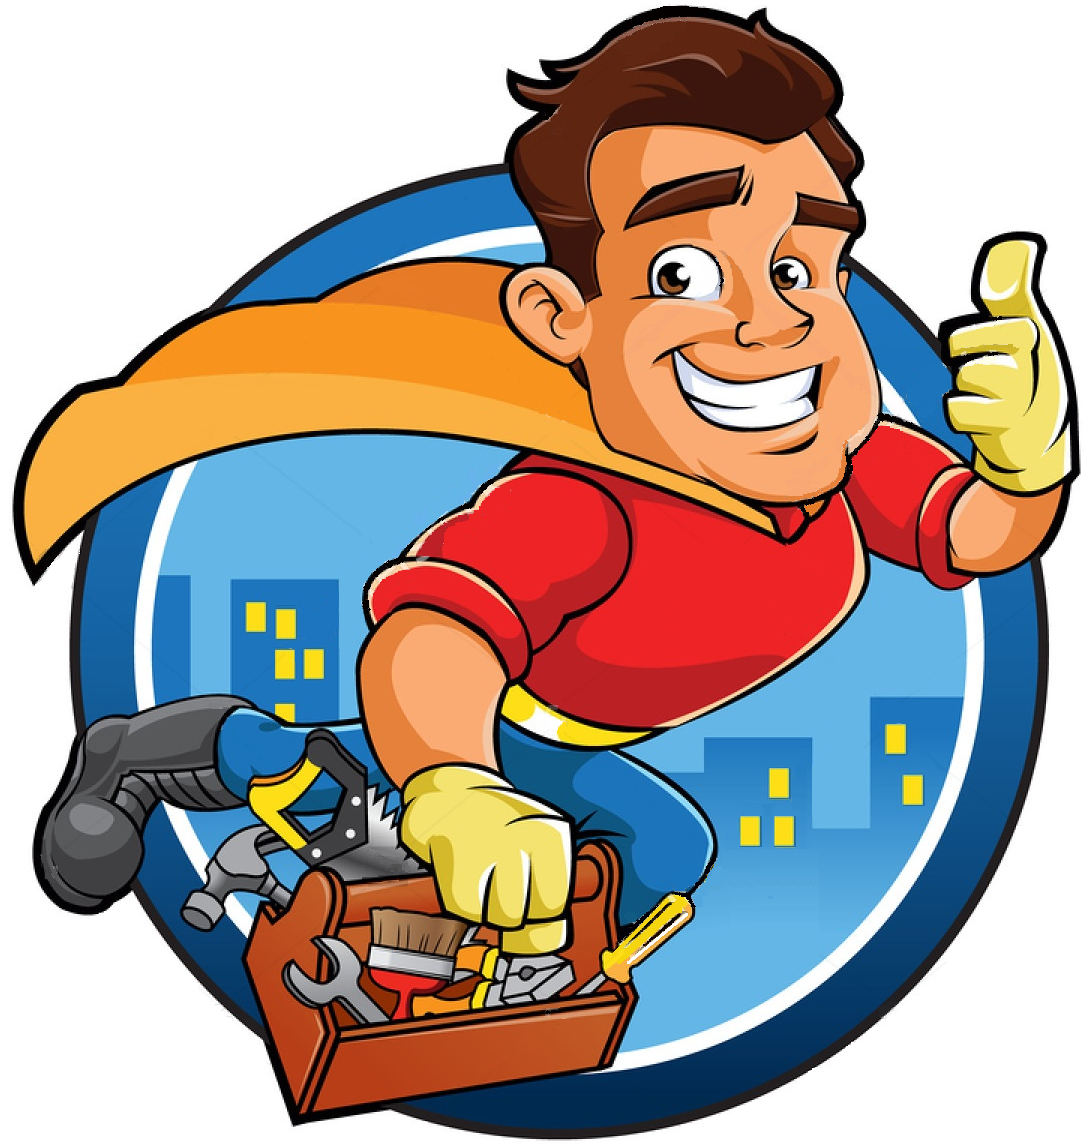 Handyman Cartoon Character With Tools PNG image